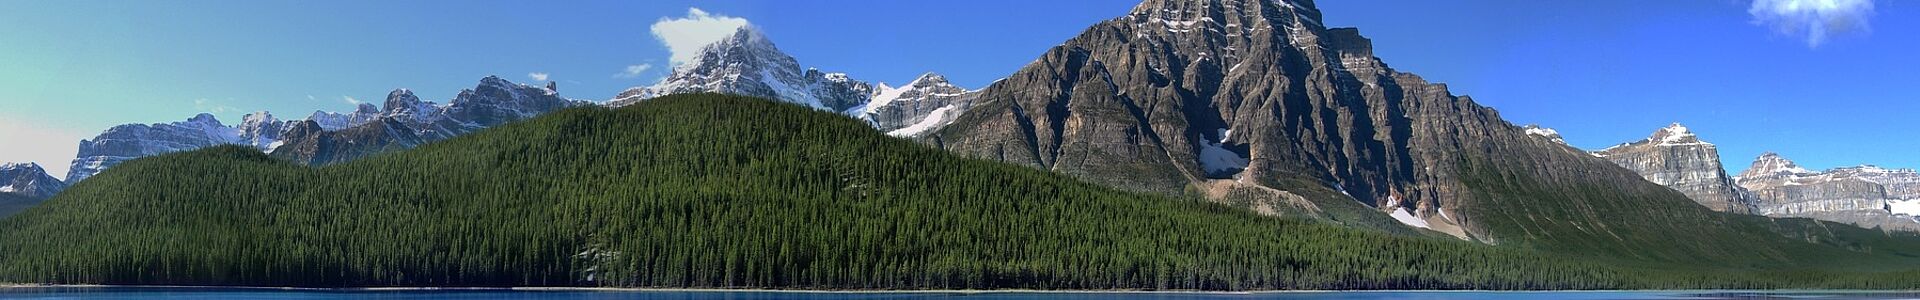 Berge in Kanada